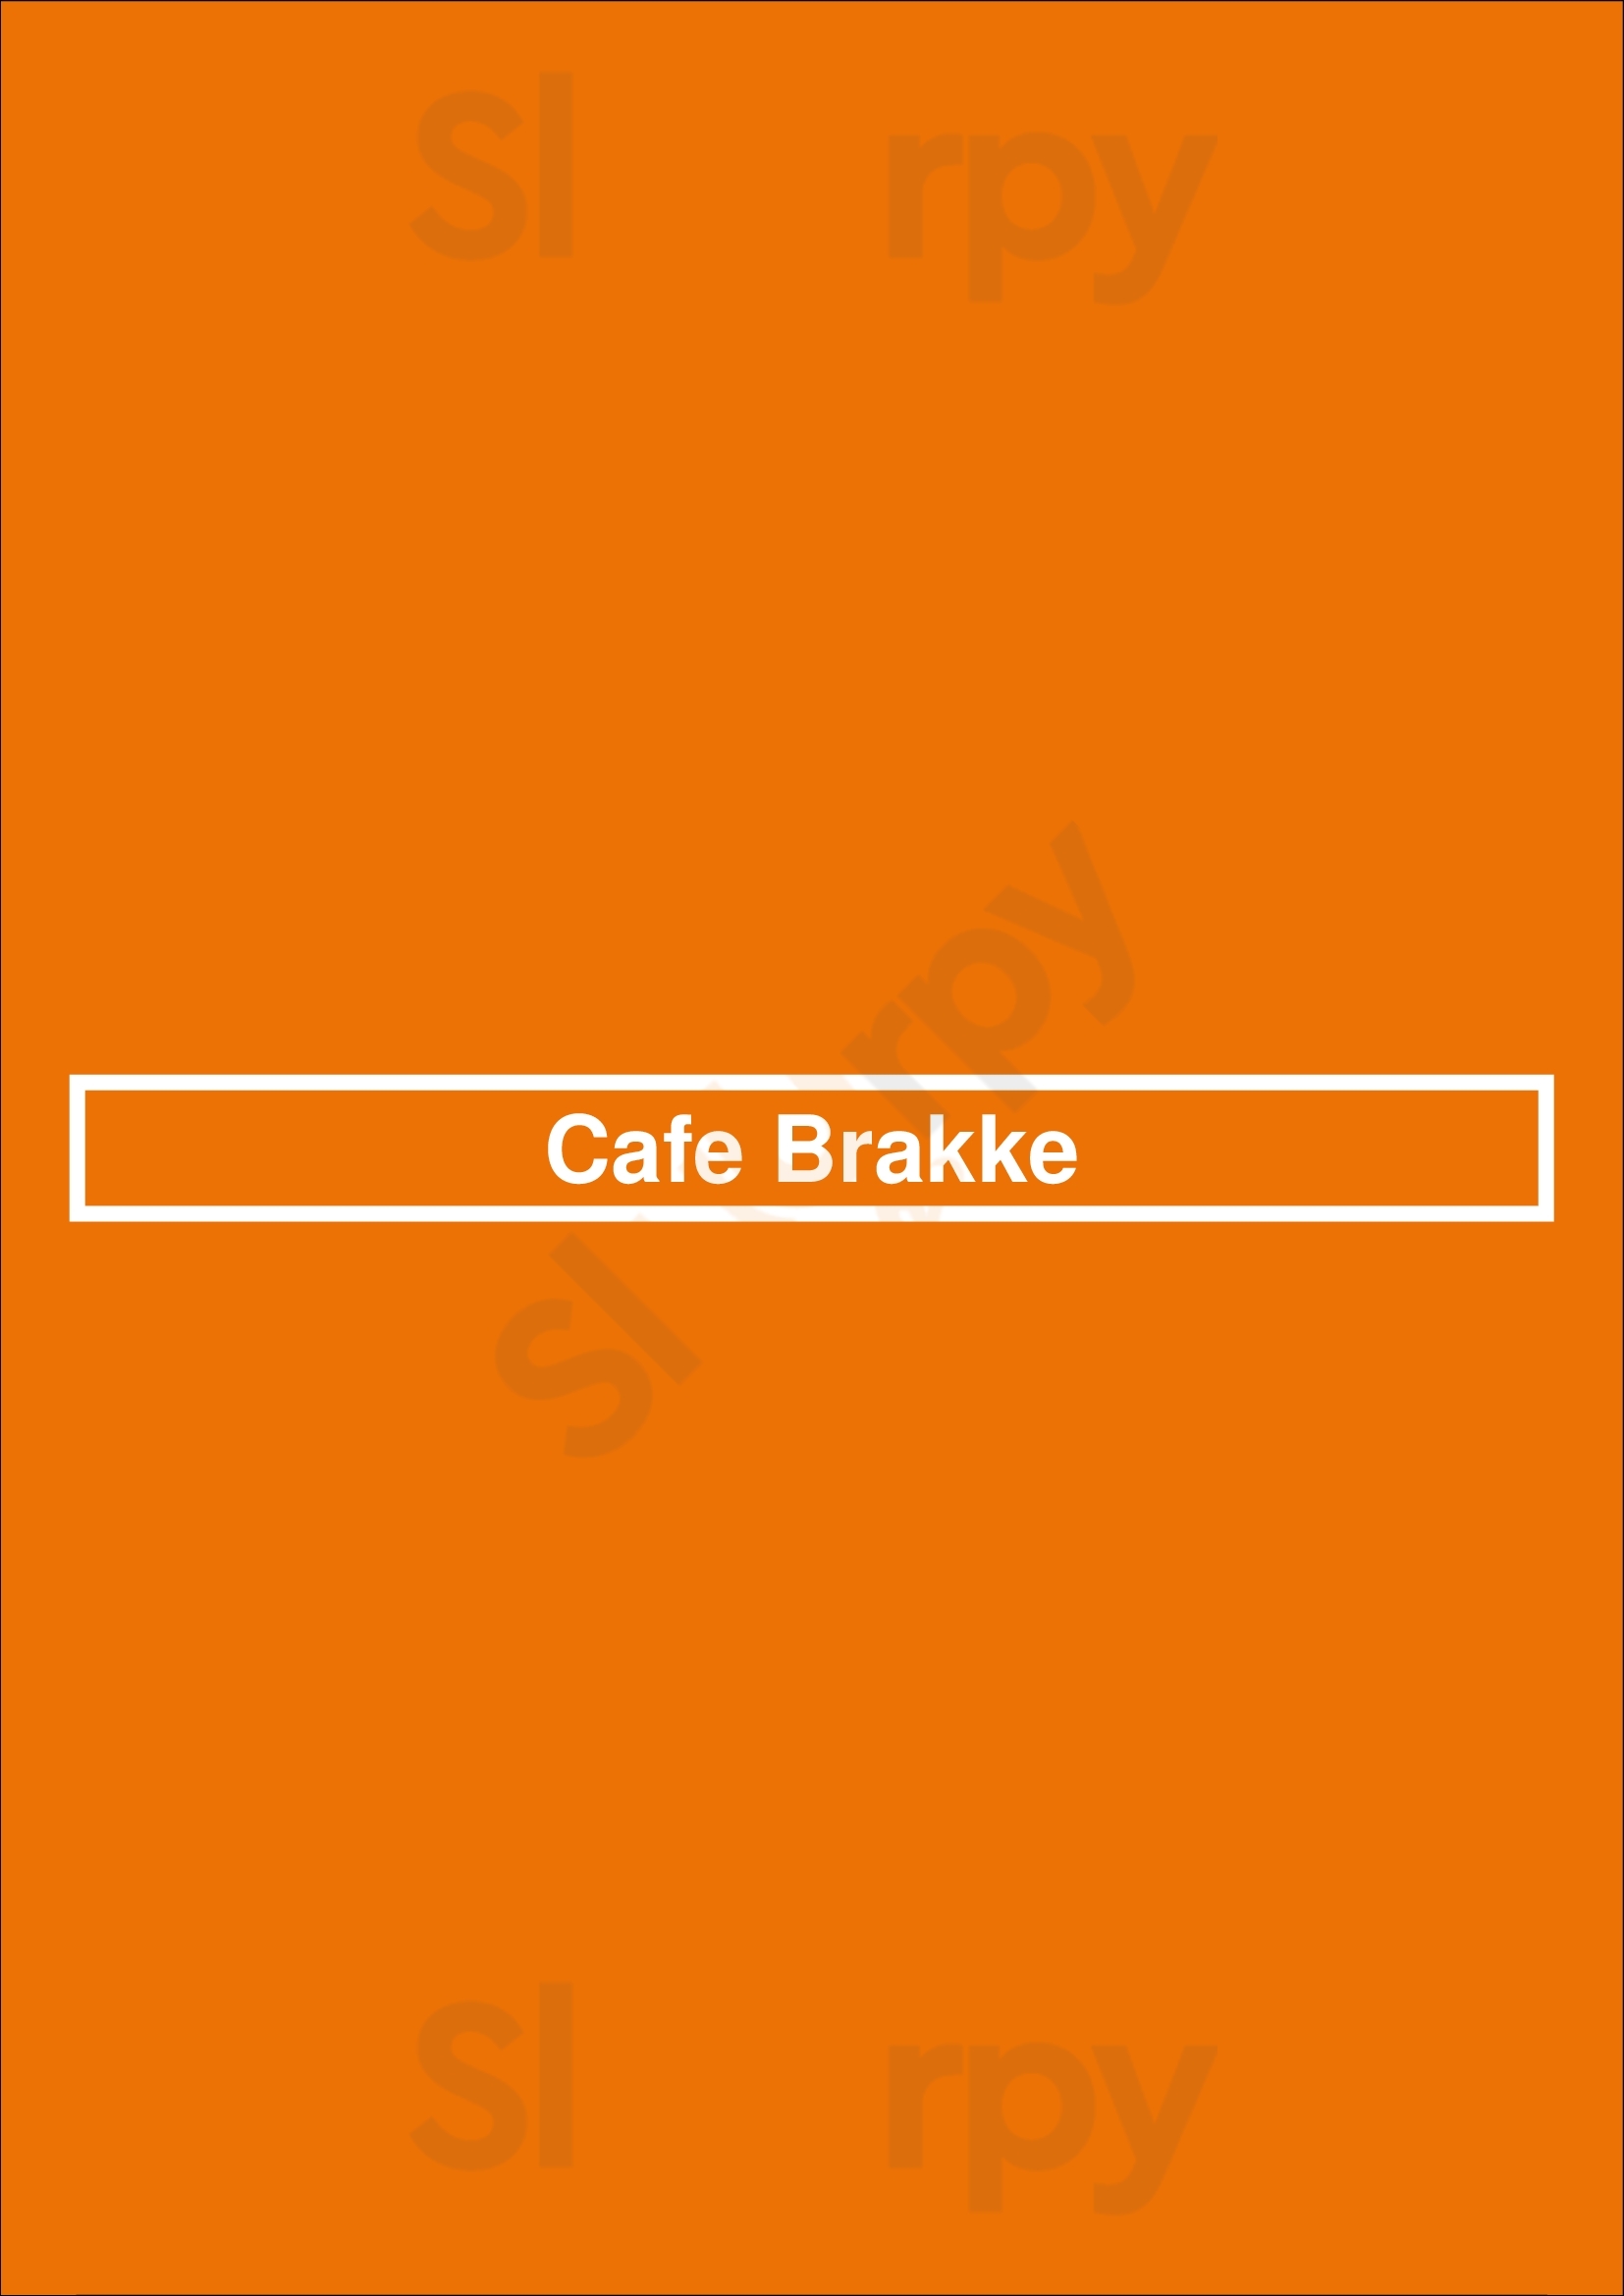 Cafe Brakke Amsterdam Menu - 1